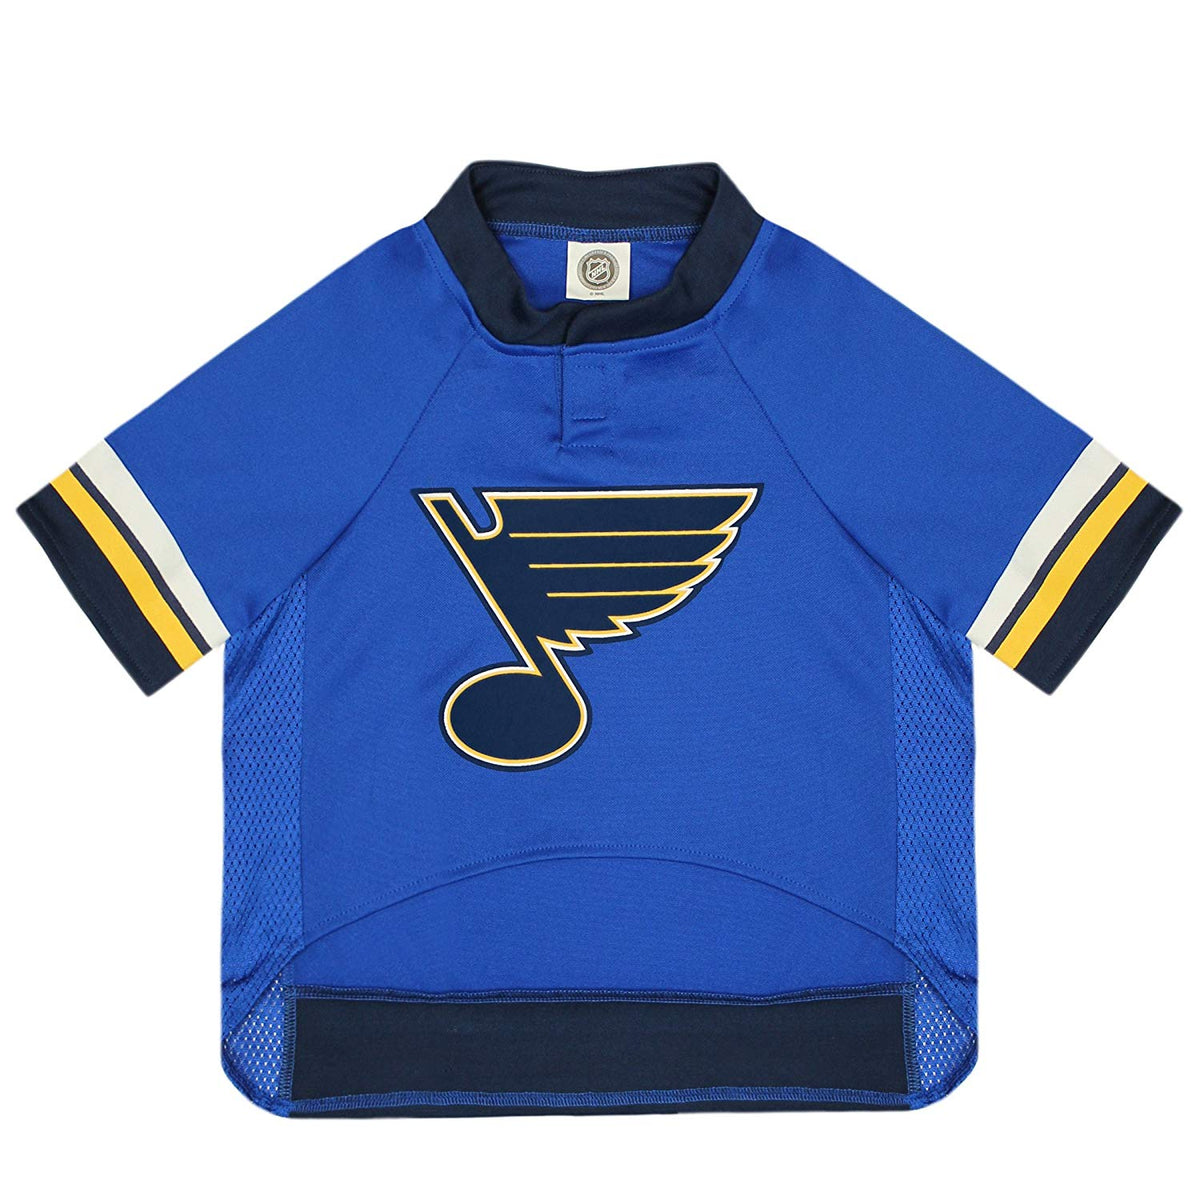 Custom Hockey Jerseys St Louis Blues Jersey Name and Number Black Team Logos Fashion